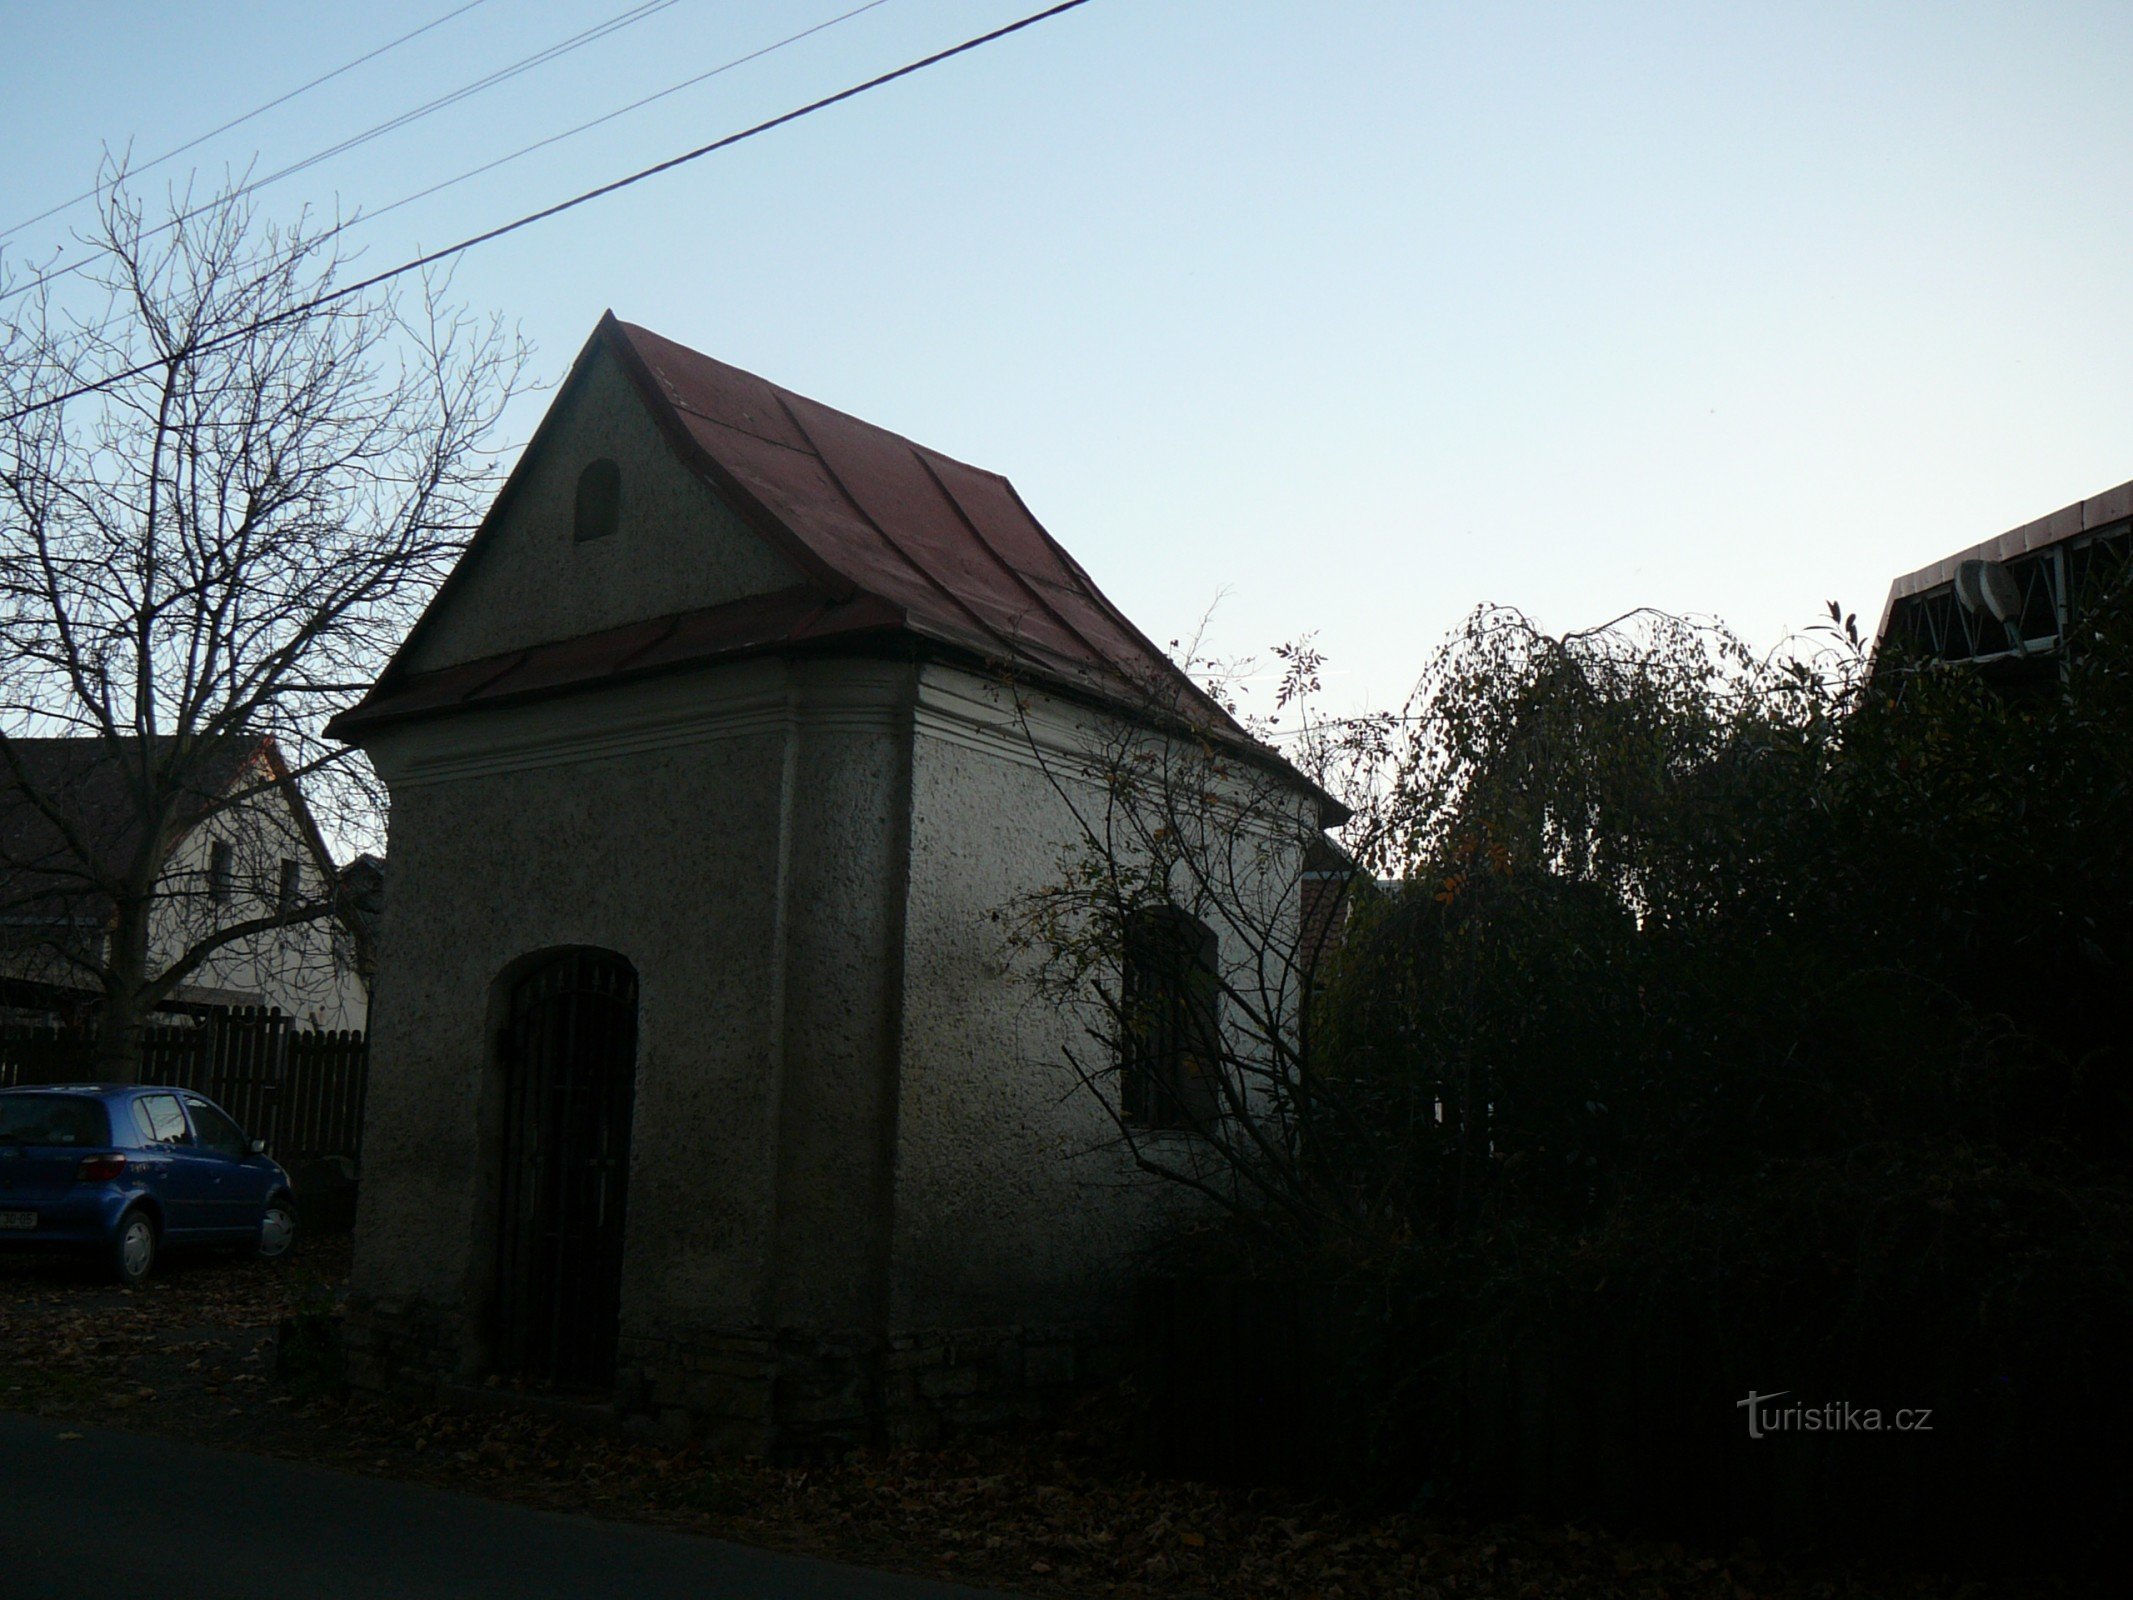 Frýdek 附近 Skalice 的圣母玛利亚礼拜堂